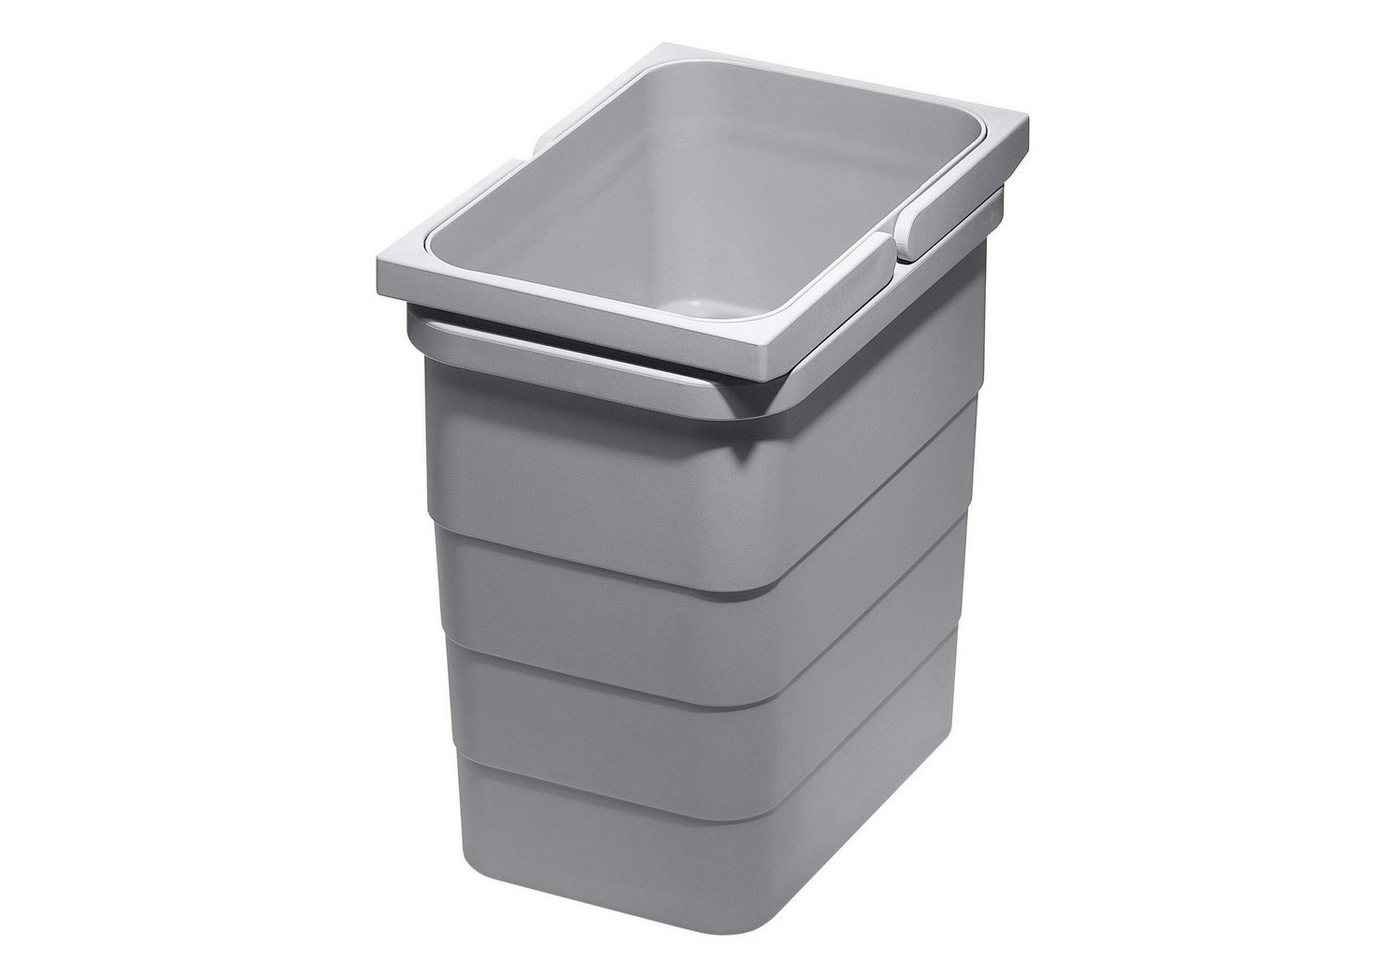 SO-TECH® Mülltrennsystem eins2vier Abfallsammler 5,5 / 7 / 8 / 12 / 15 oder 17 Liter, Mülleimer Abfalleimer von SO-TECH®